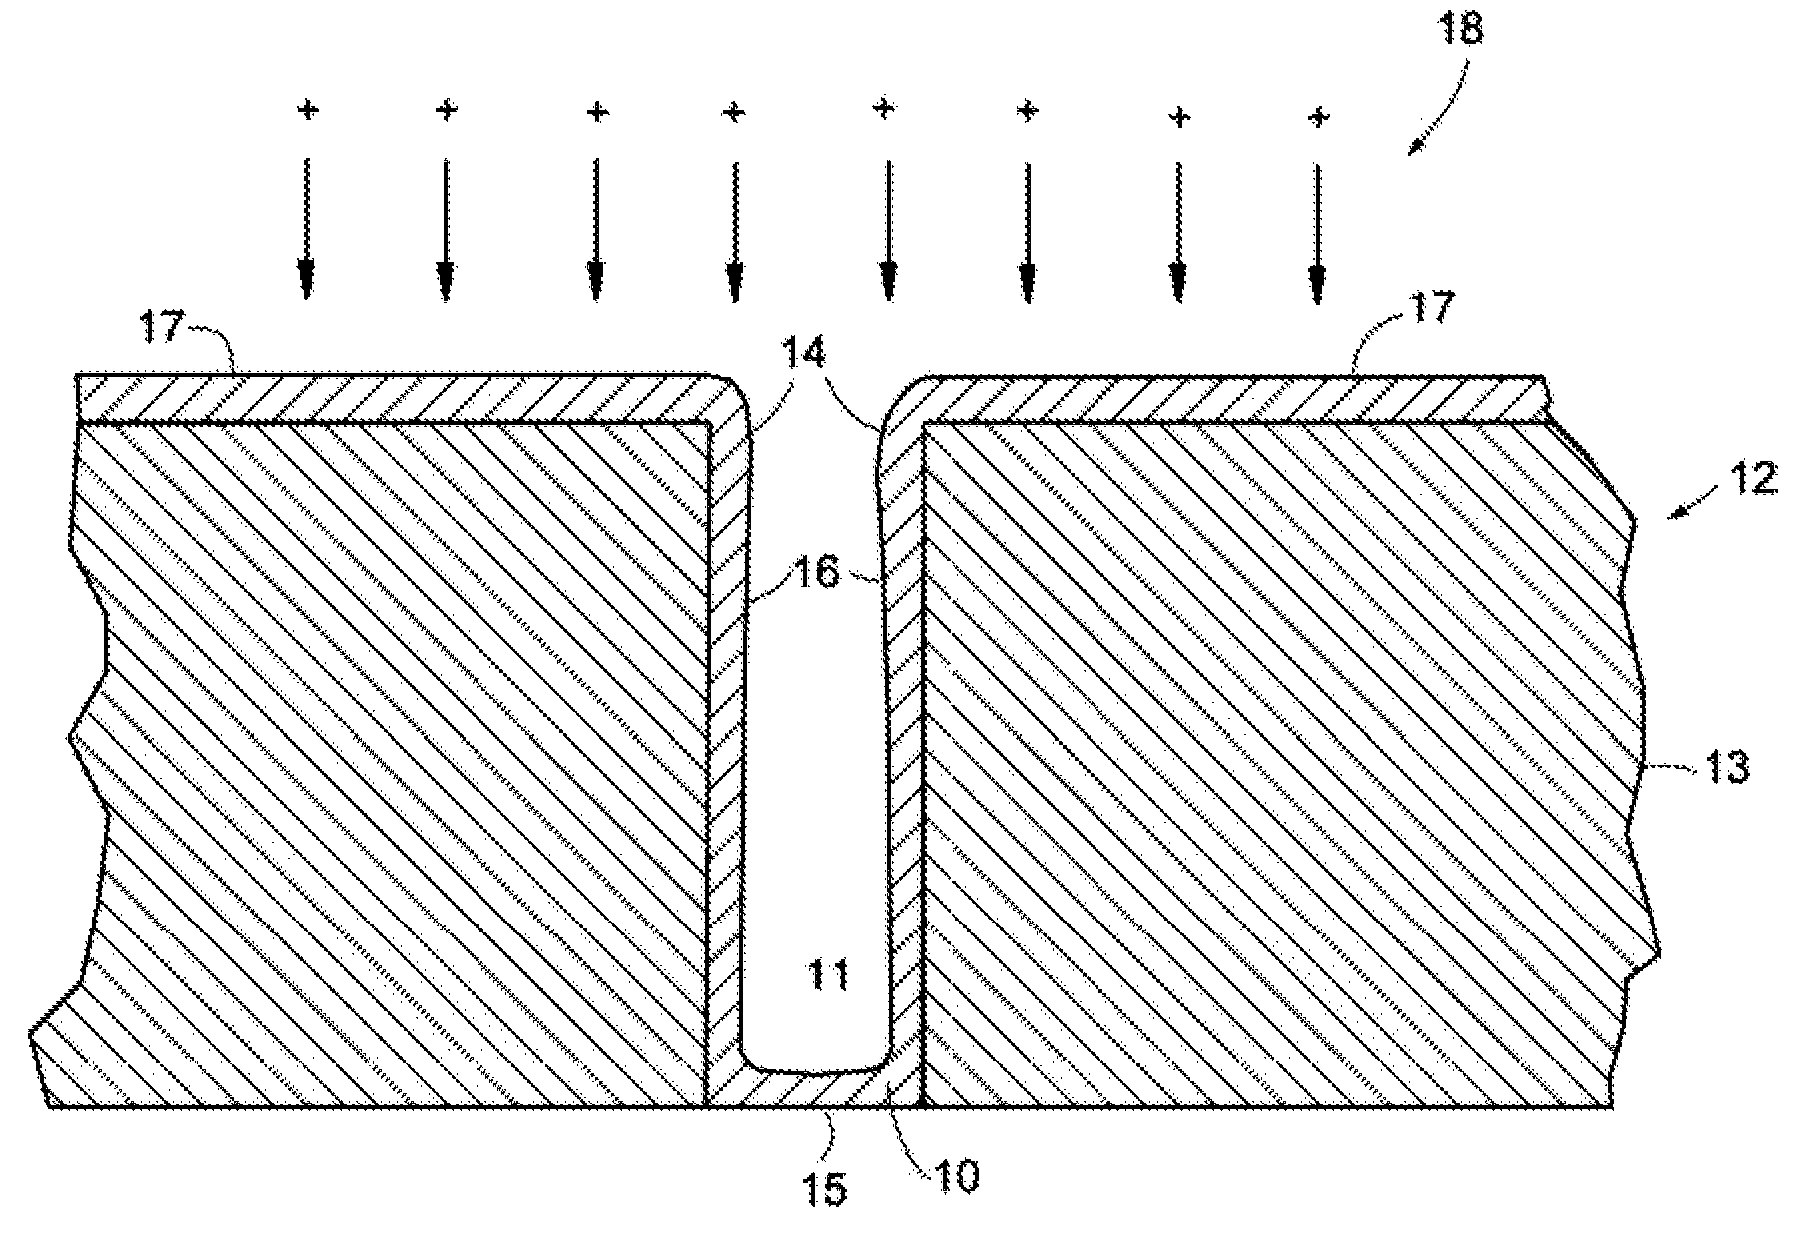 Barrier deposition using ionized physical vapor deposition (iPVD)